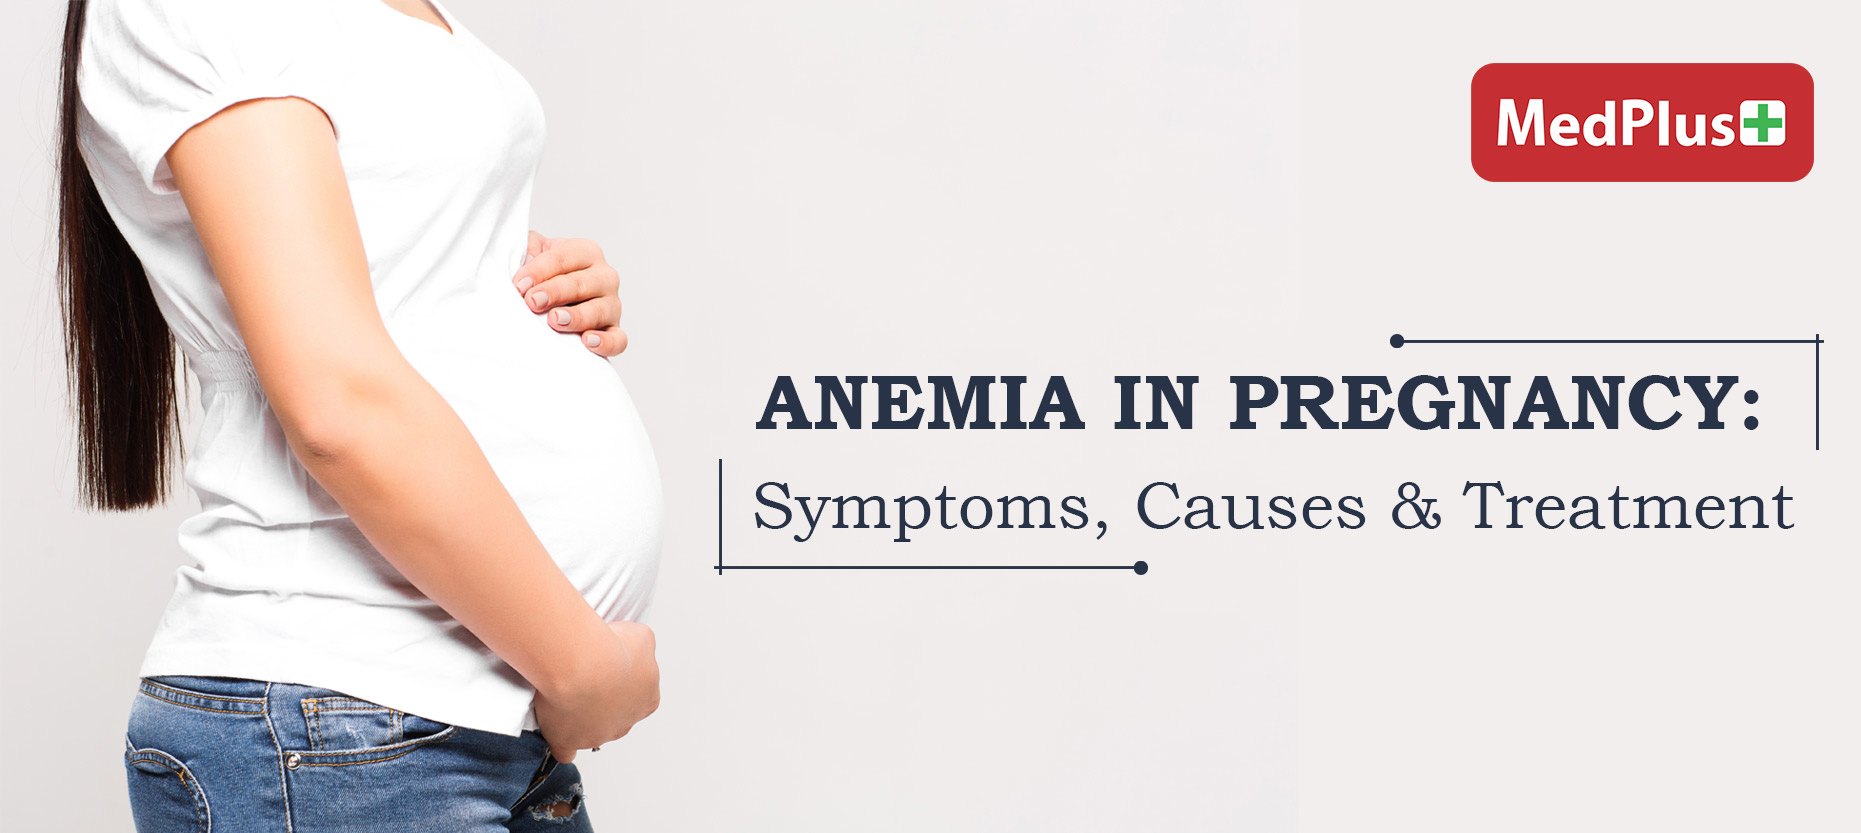 Anemia Pregnancy: Types, Symptoms, Causes & Treatment